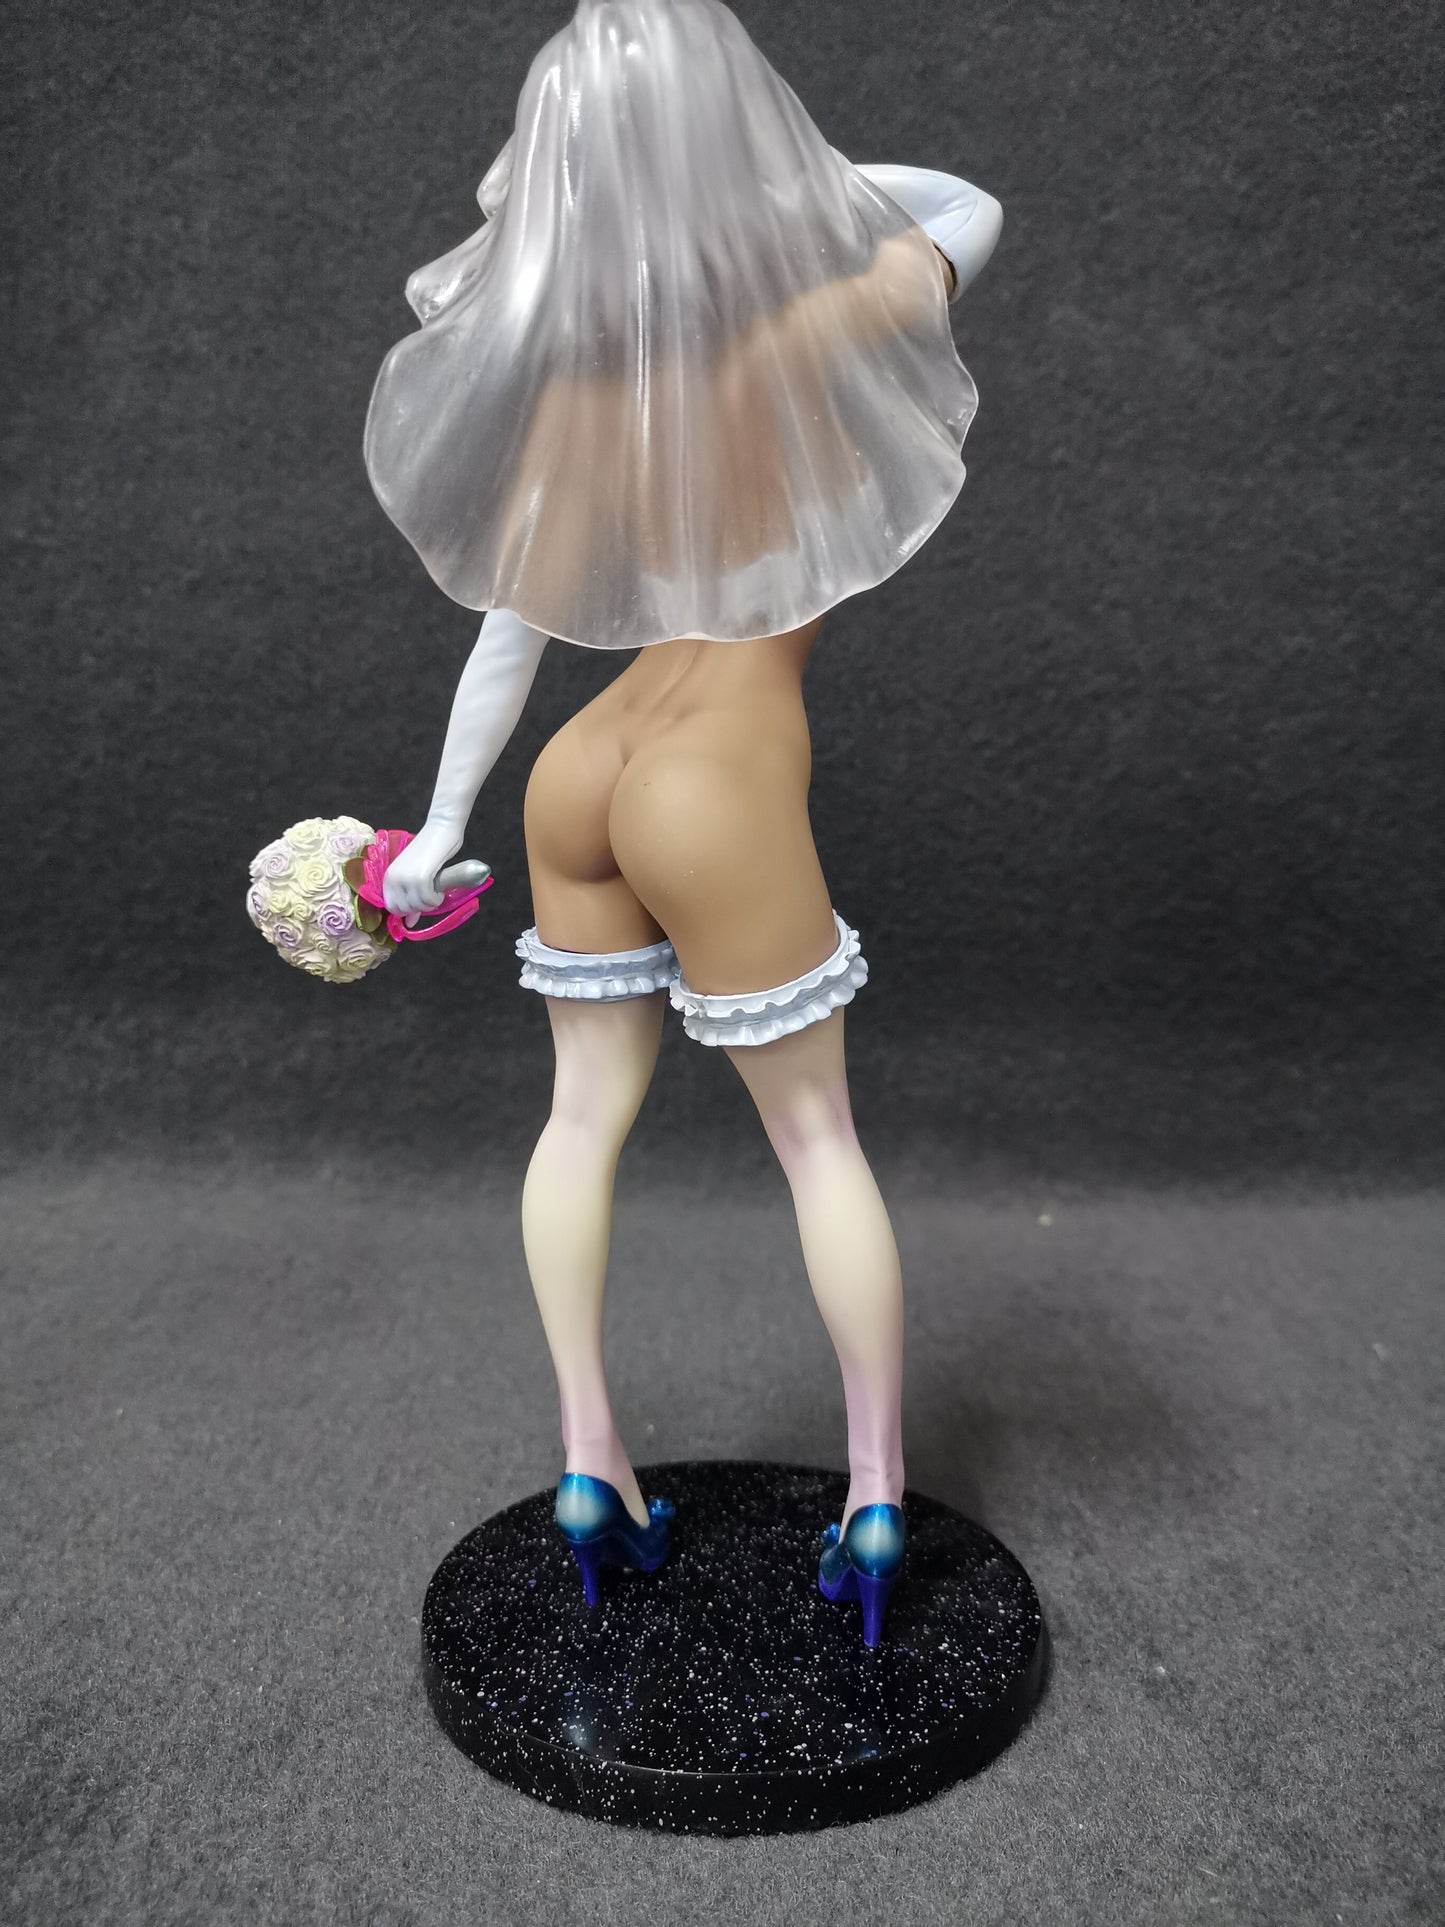 Senran Kagura: New Wave G Burst Yumi huge breast 1/6 naked anime figure collectible action figures